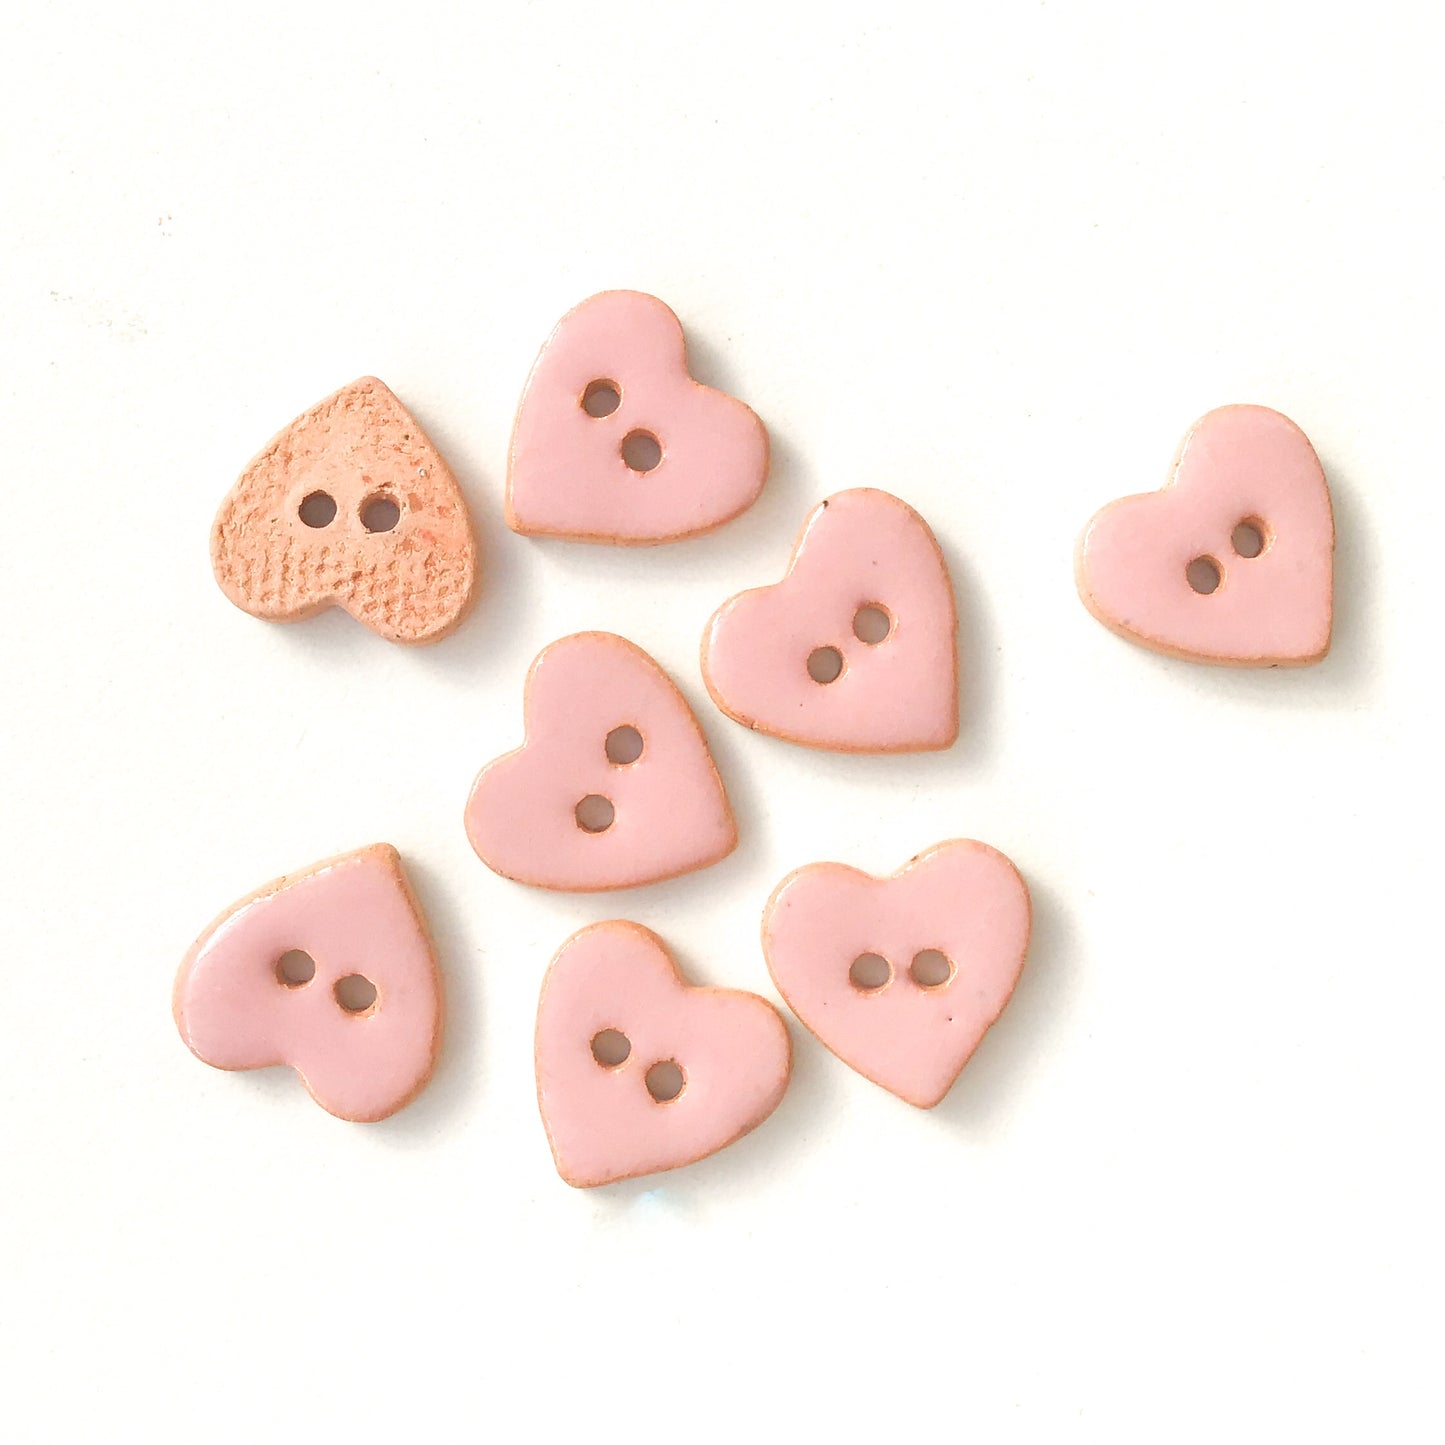 Soft Pink Heart Buttons - Ceramic Heart Buttons - 5/8" x 9/16" - 8 Pack (ws-196)